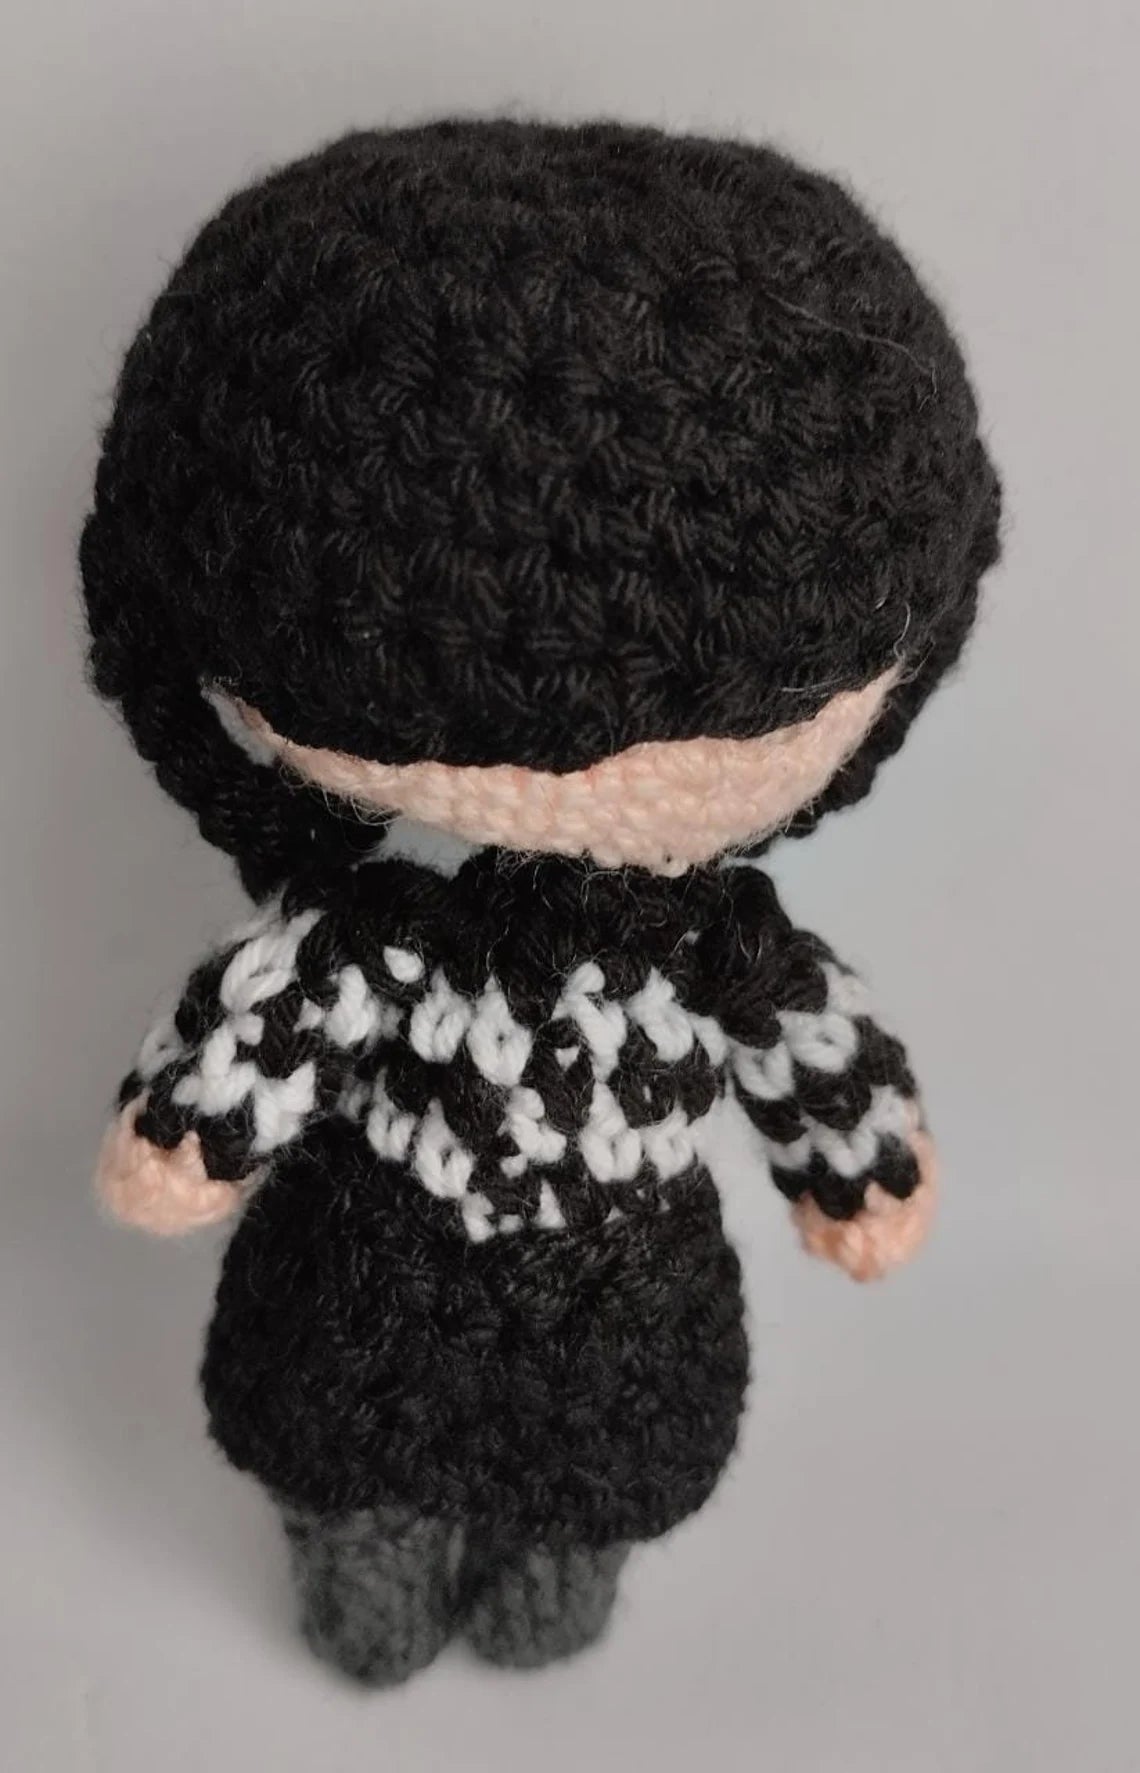 Crochet Small Wednesday Addams. Amigurumi